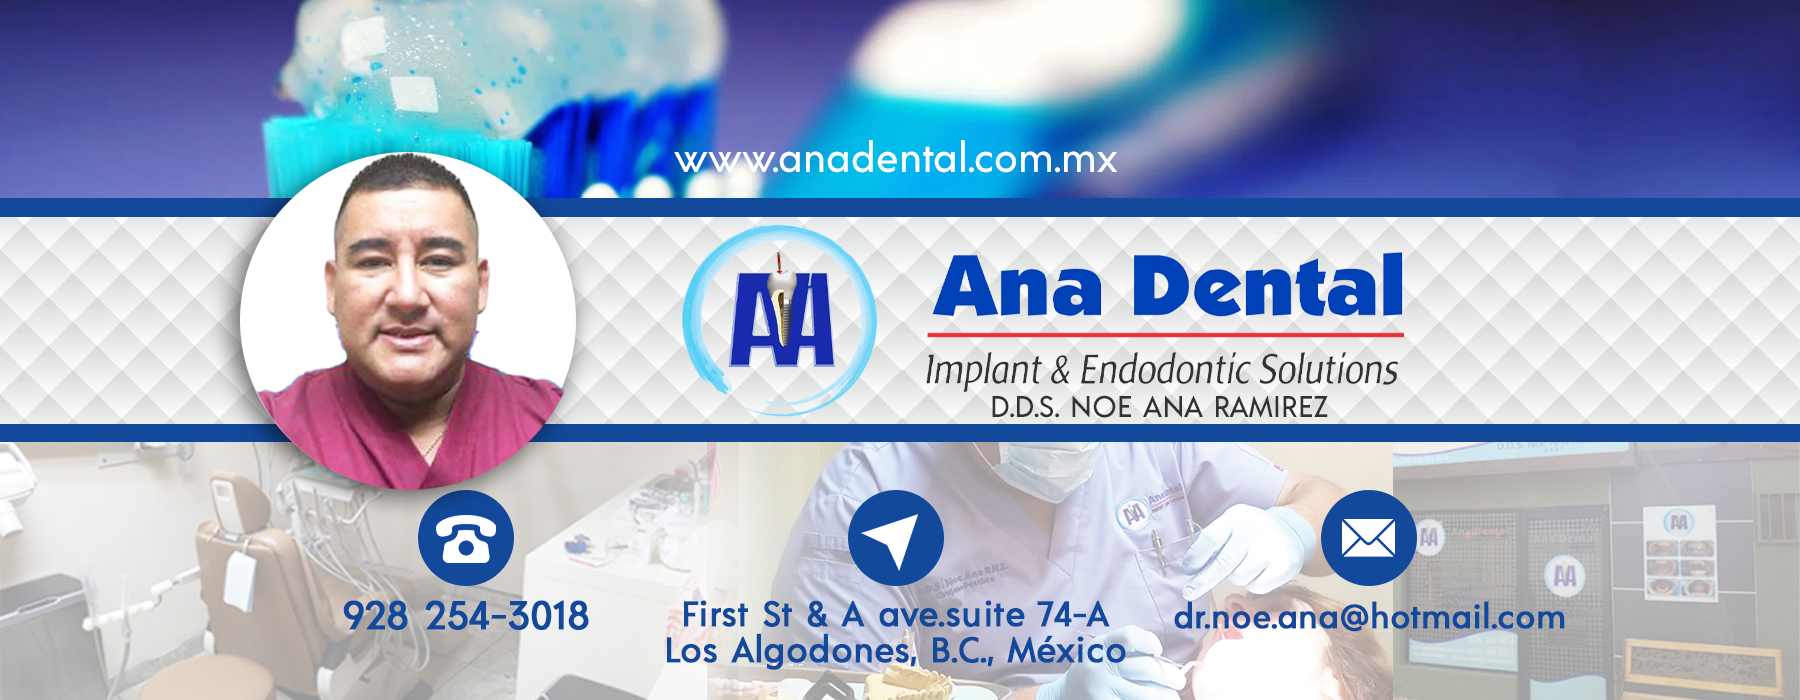  Ana Dental Implants & Endodontics Solutions